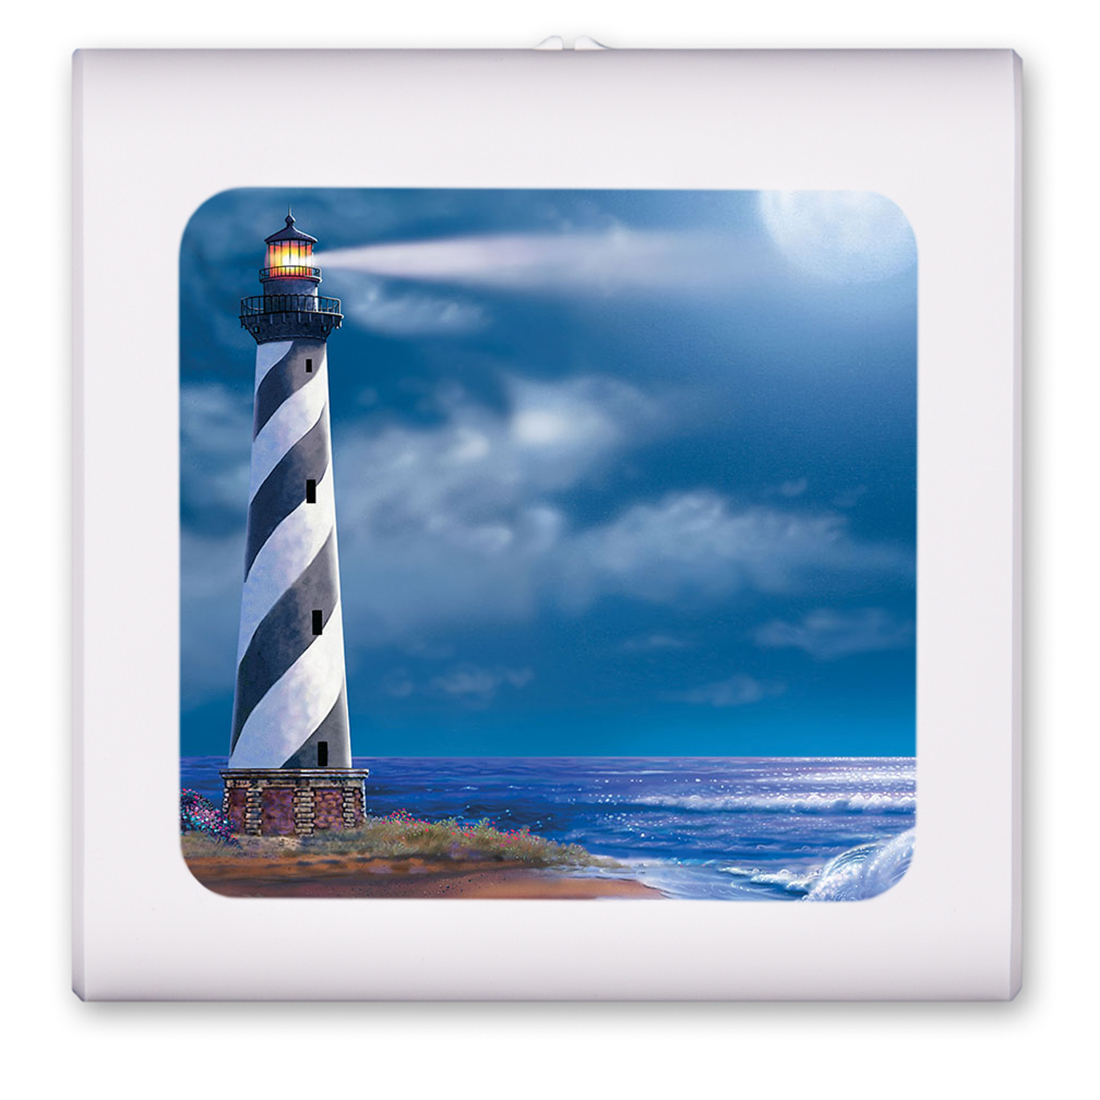 Cape Hatteras Lighthouse - #222